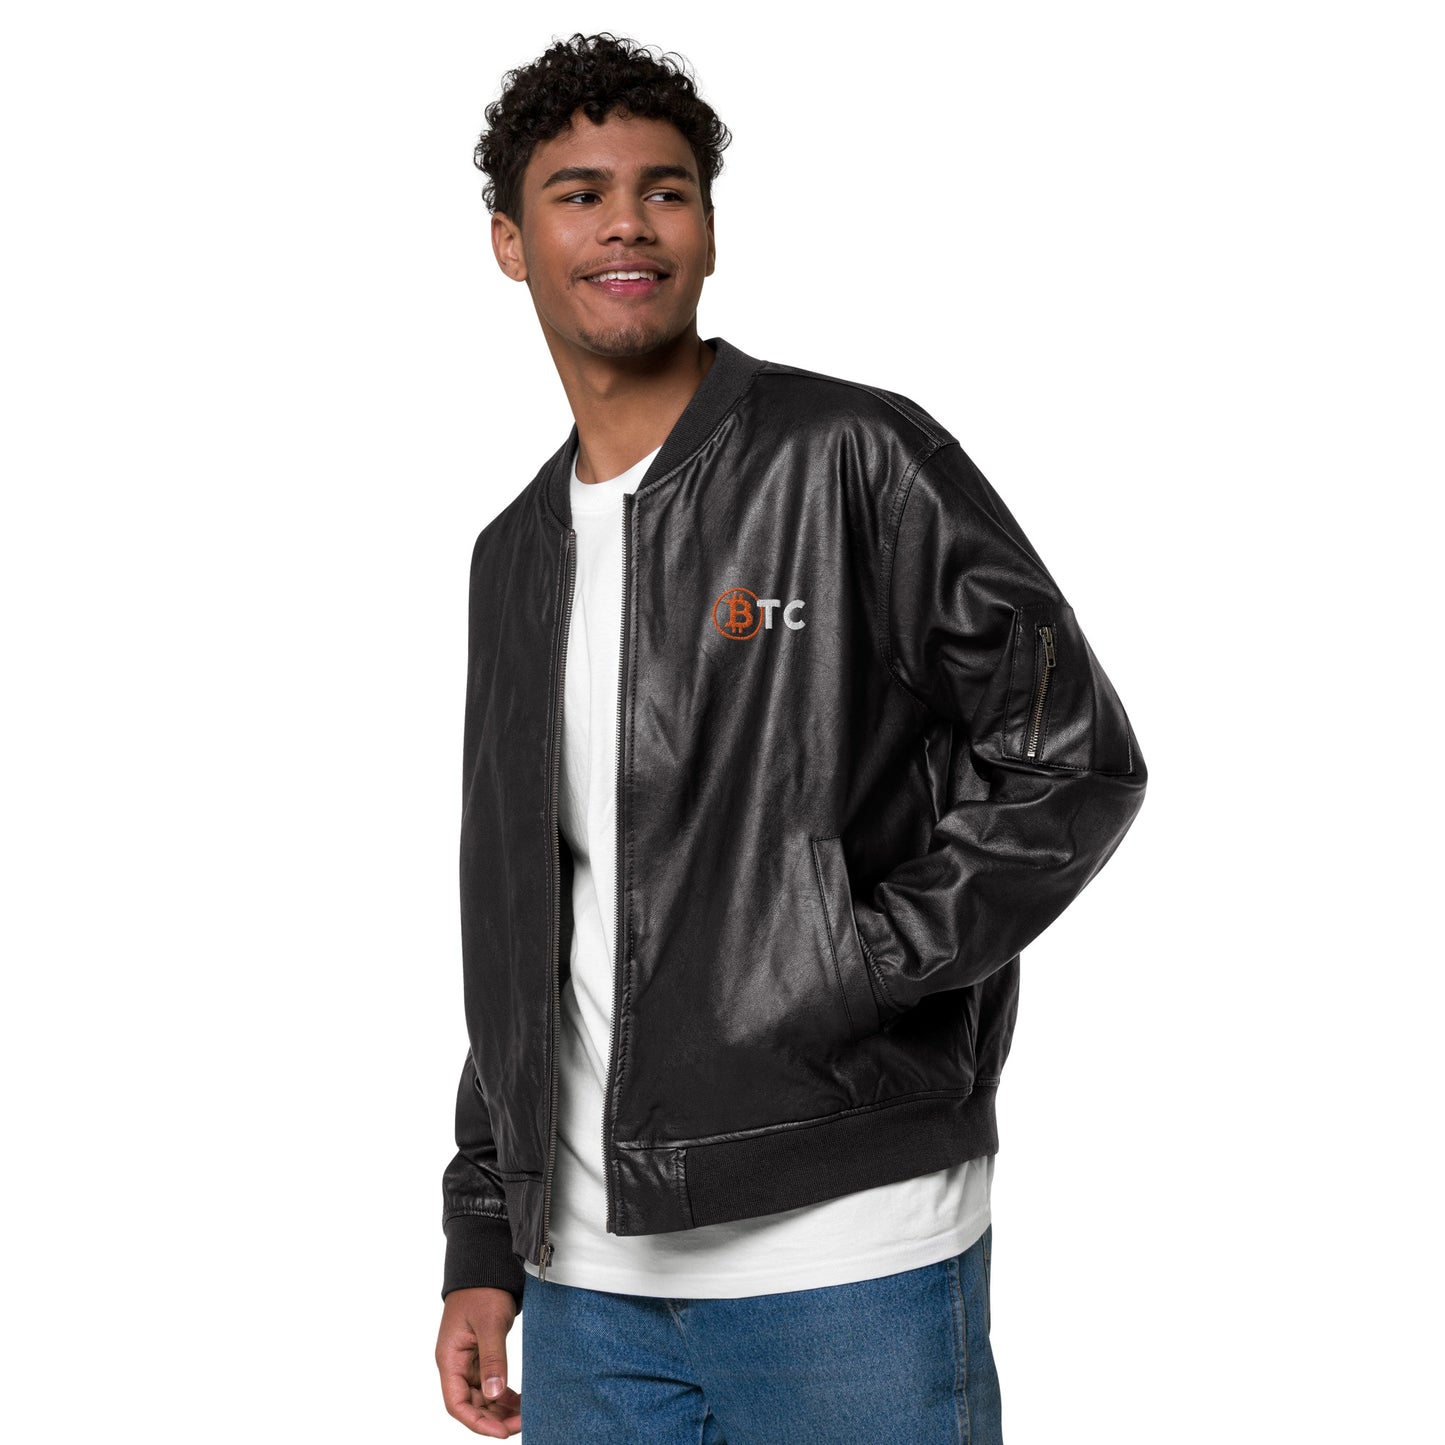 BTC Classics Leather Bomber Jacket